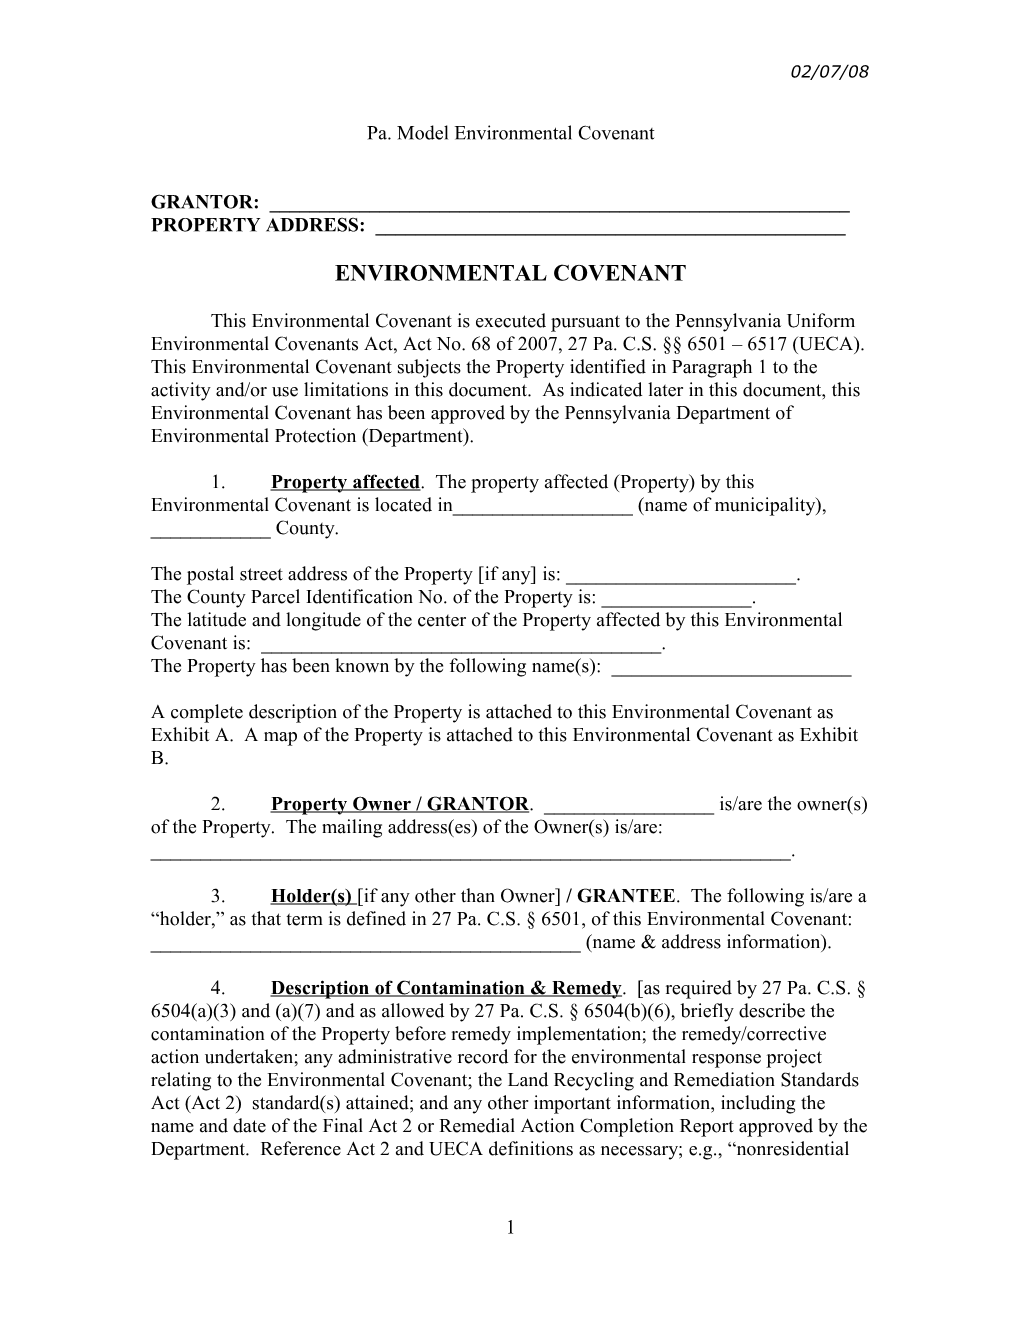 Pa. Model Environmental Covenant